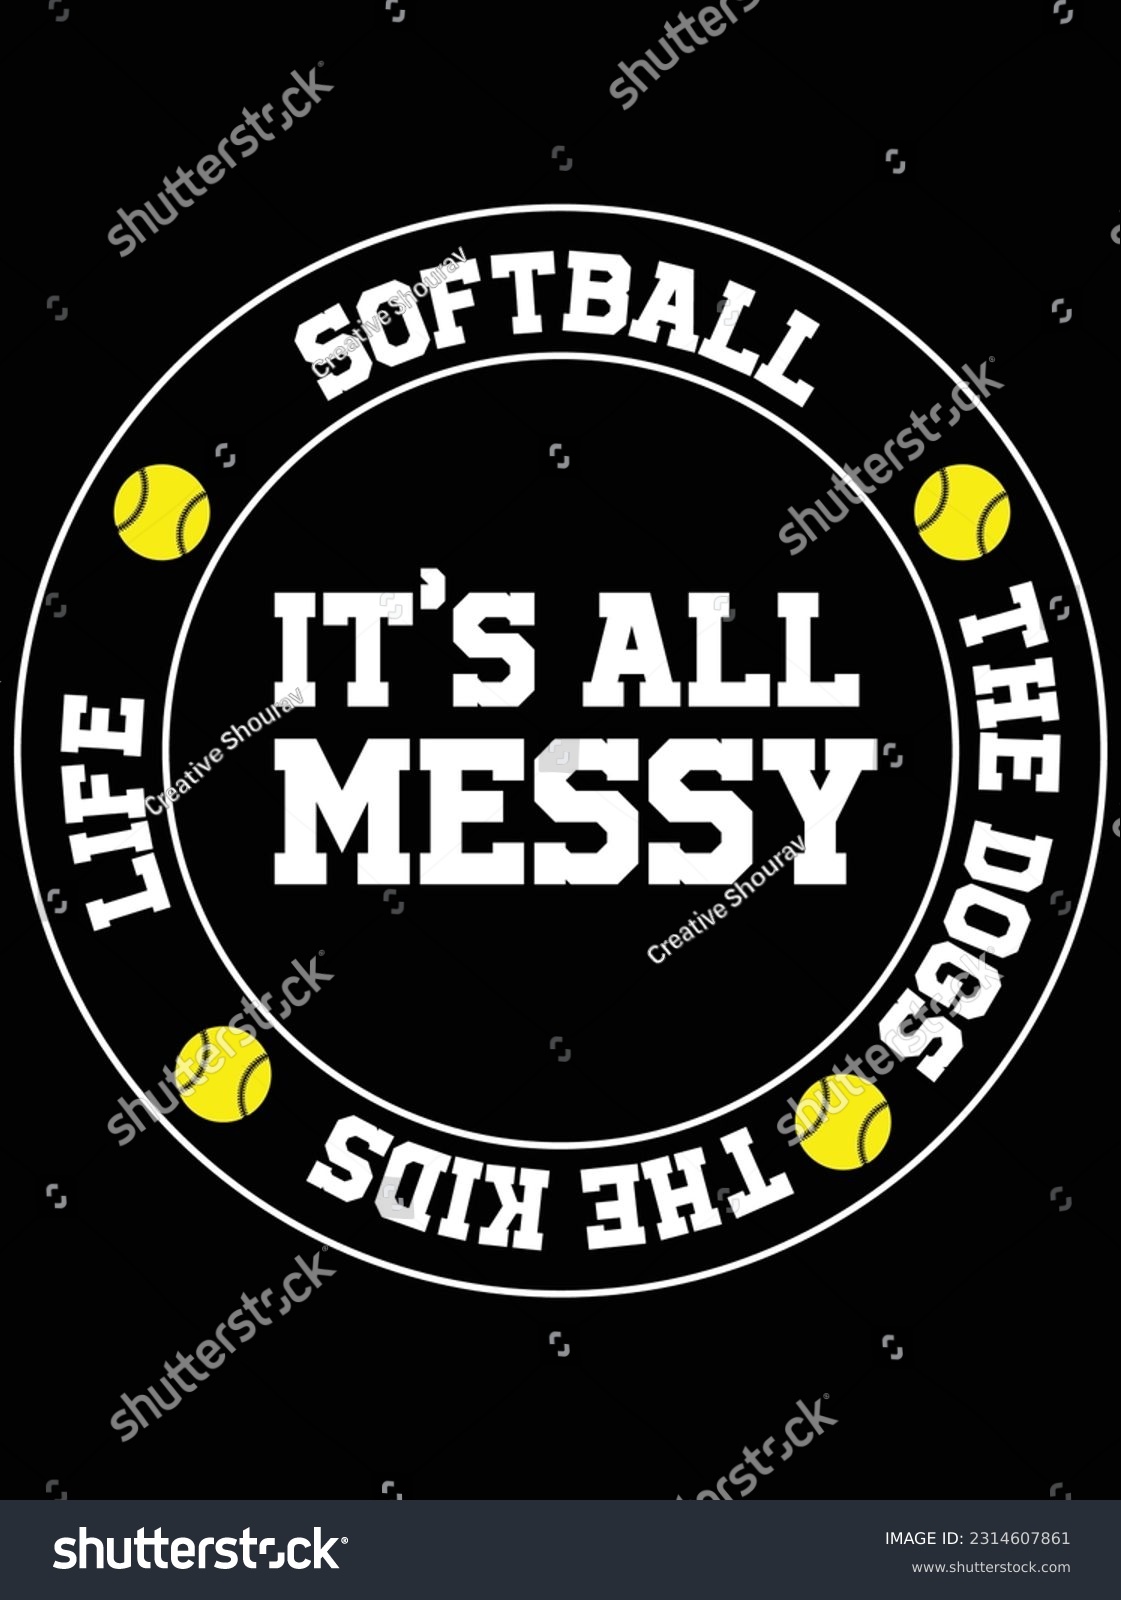 SVG of Softball it's all messy vector art design, eps file. design file for t-shirt. SVG, EPS cuttable design file svg